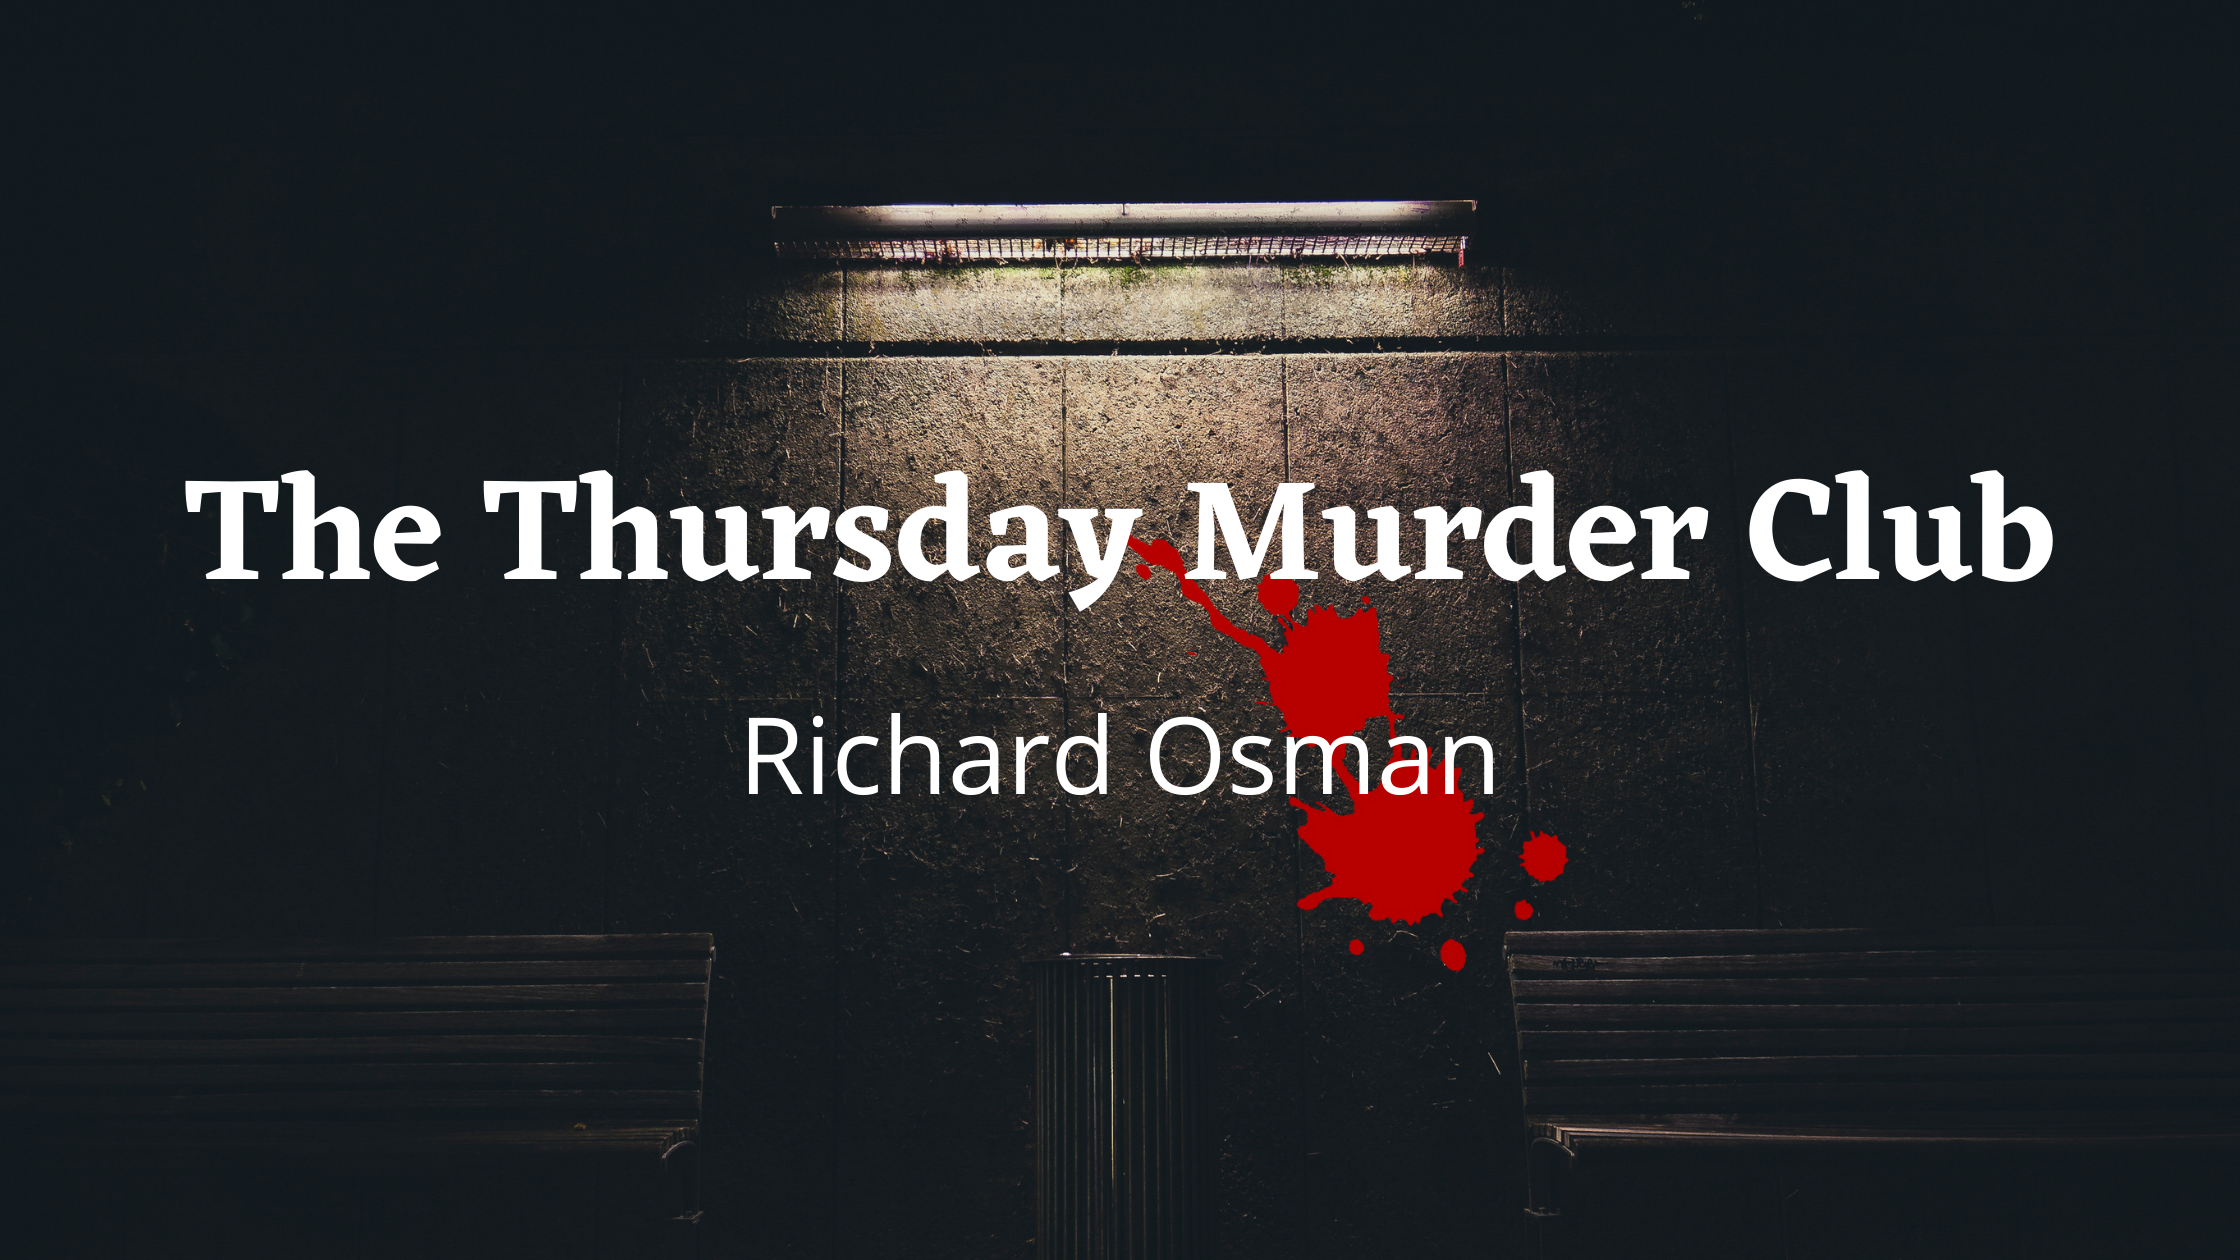 Book Review: The Thursday Murder Club by Richard Osman